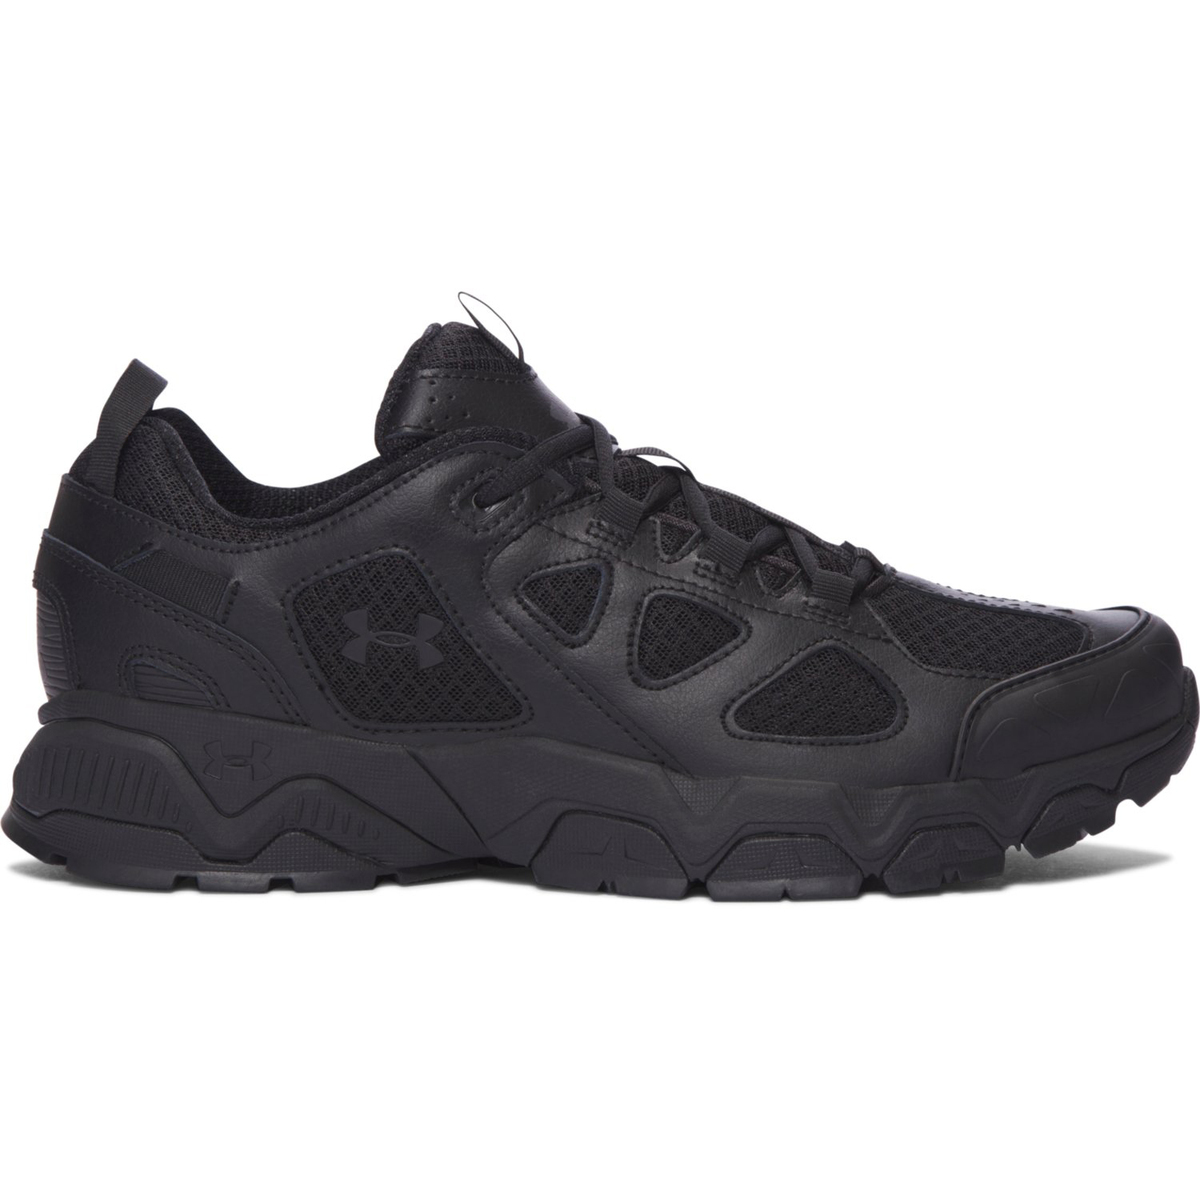 Under Armour Men's Mirage 3.0 Hiking Shoes - Black - Size 8.5 - Black 8 ...